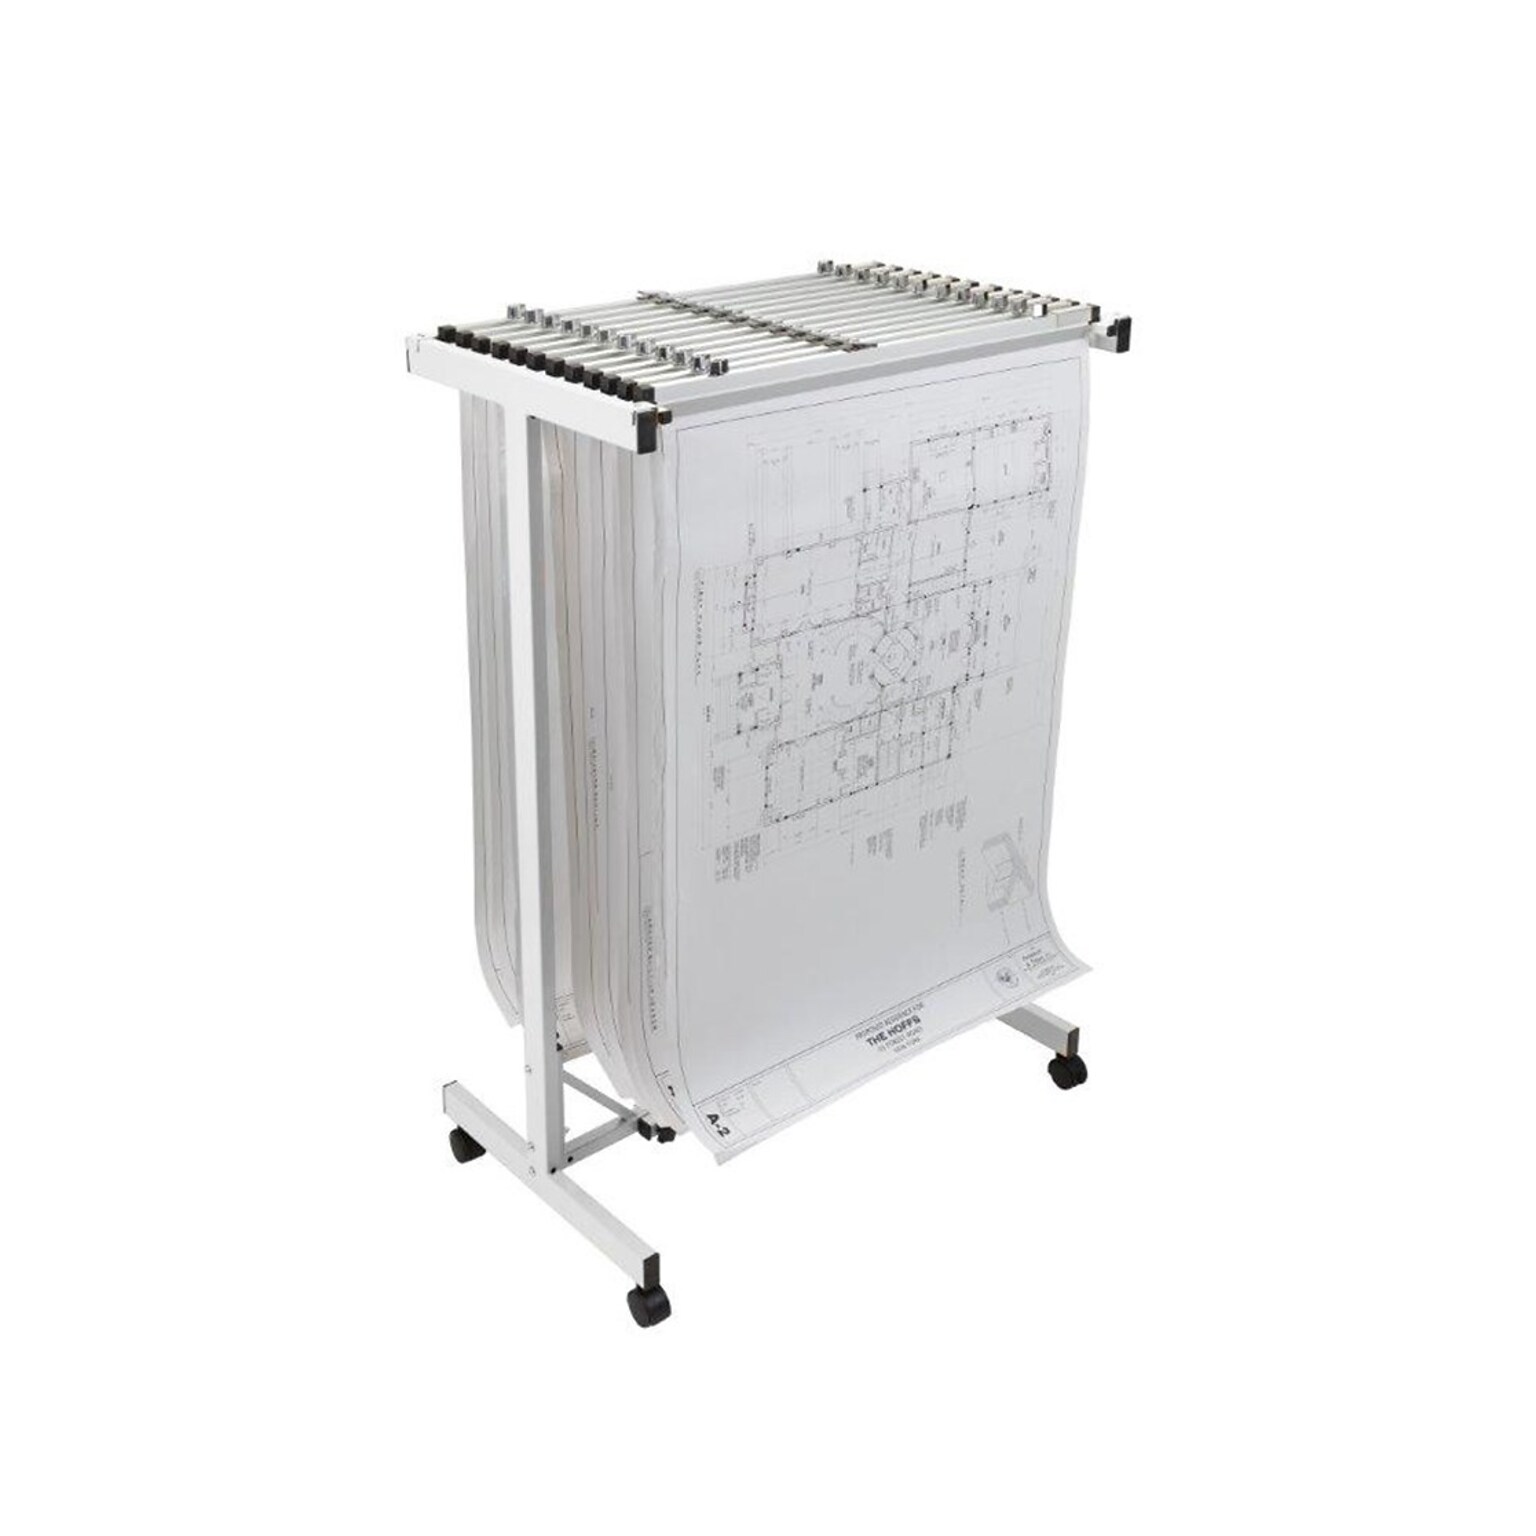 AdirOffice Blueprint Metal Mobile File Cart with Lockable Wheels, White (615-WHI)